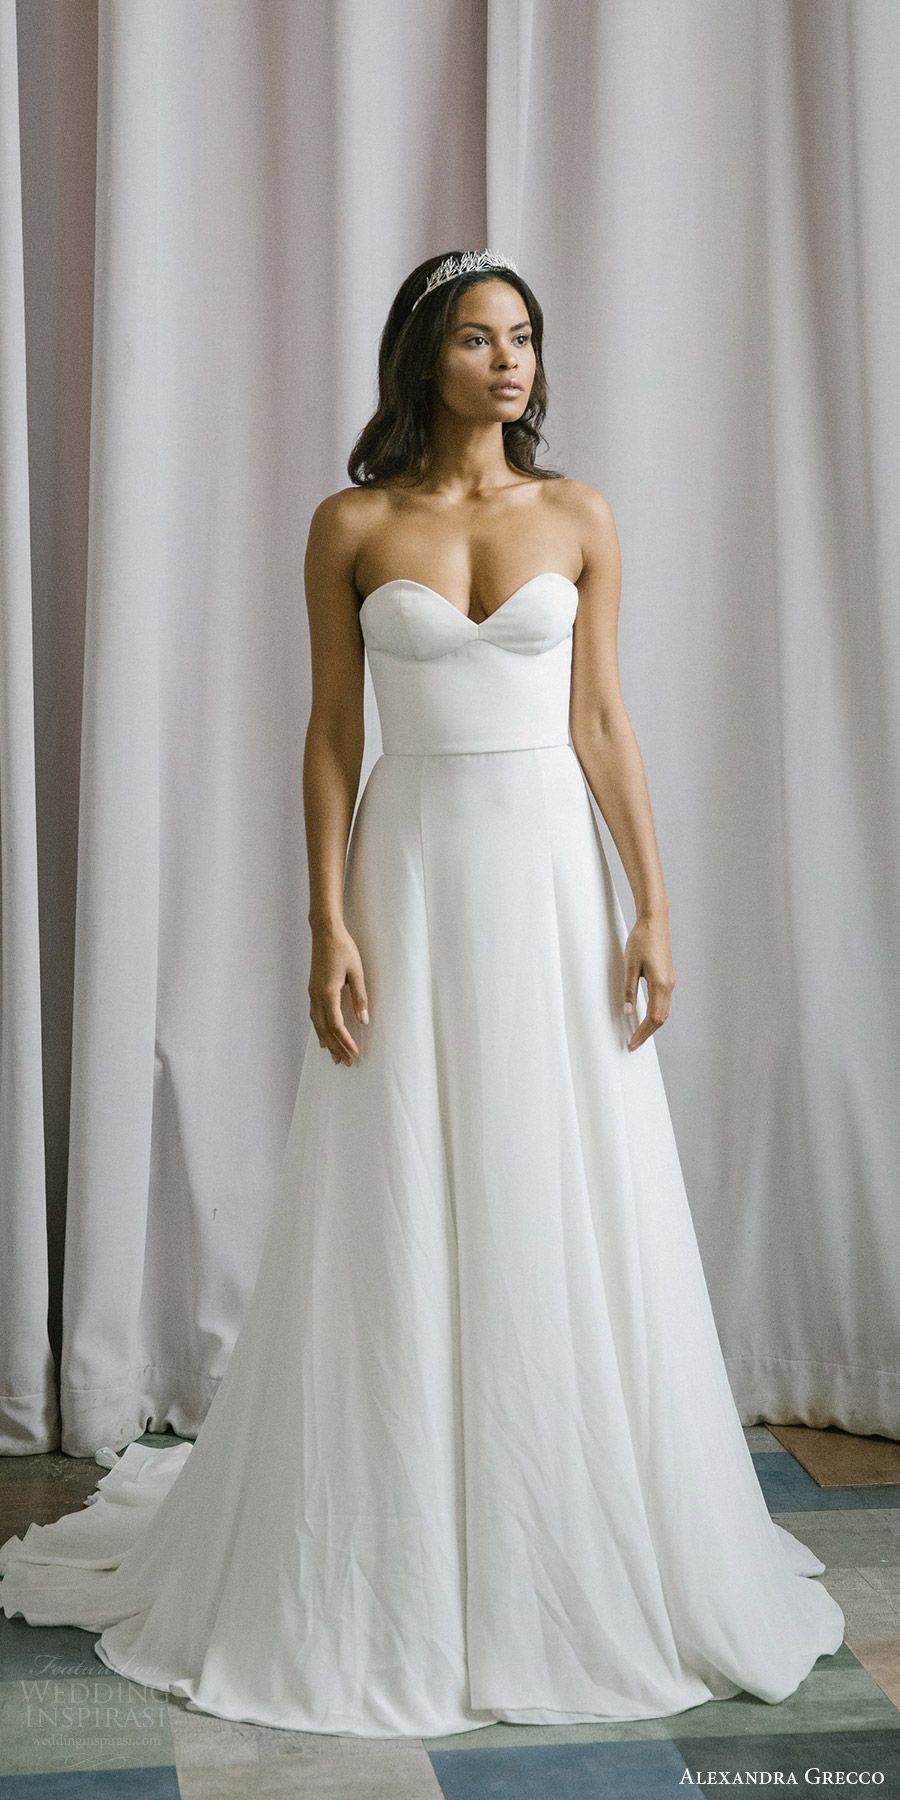 Alexandra Grecco 'Emma' size 8 sample wedding dress front view on model